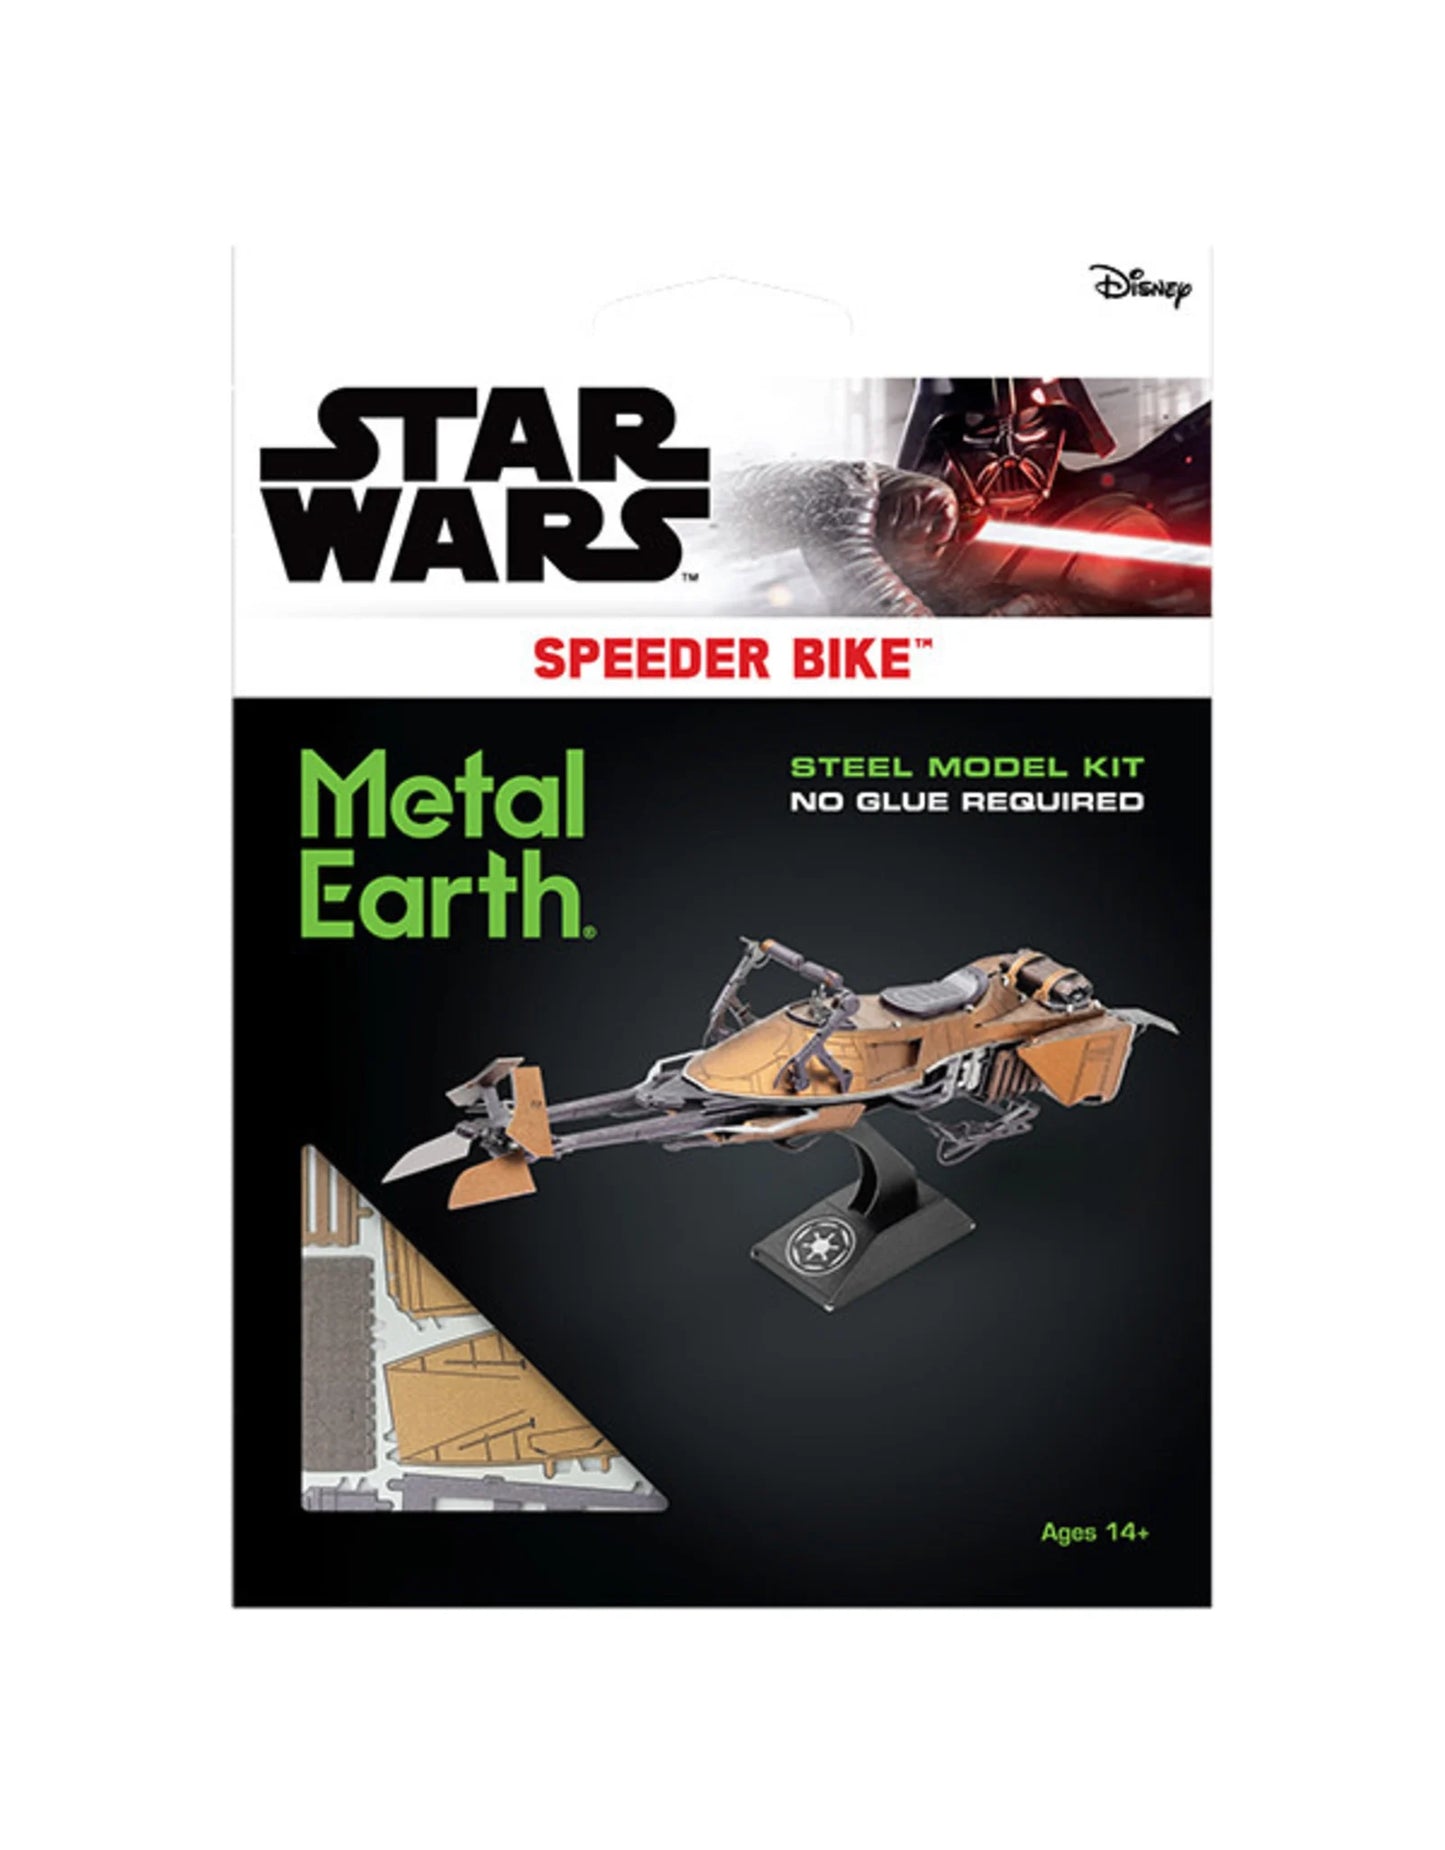 Speeder bike Metal Earth - Star Wars